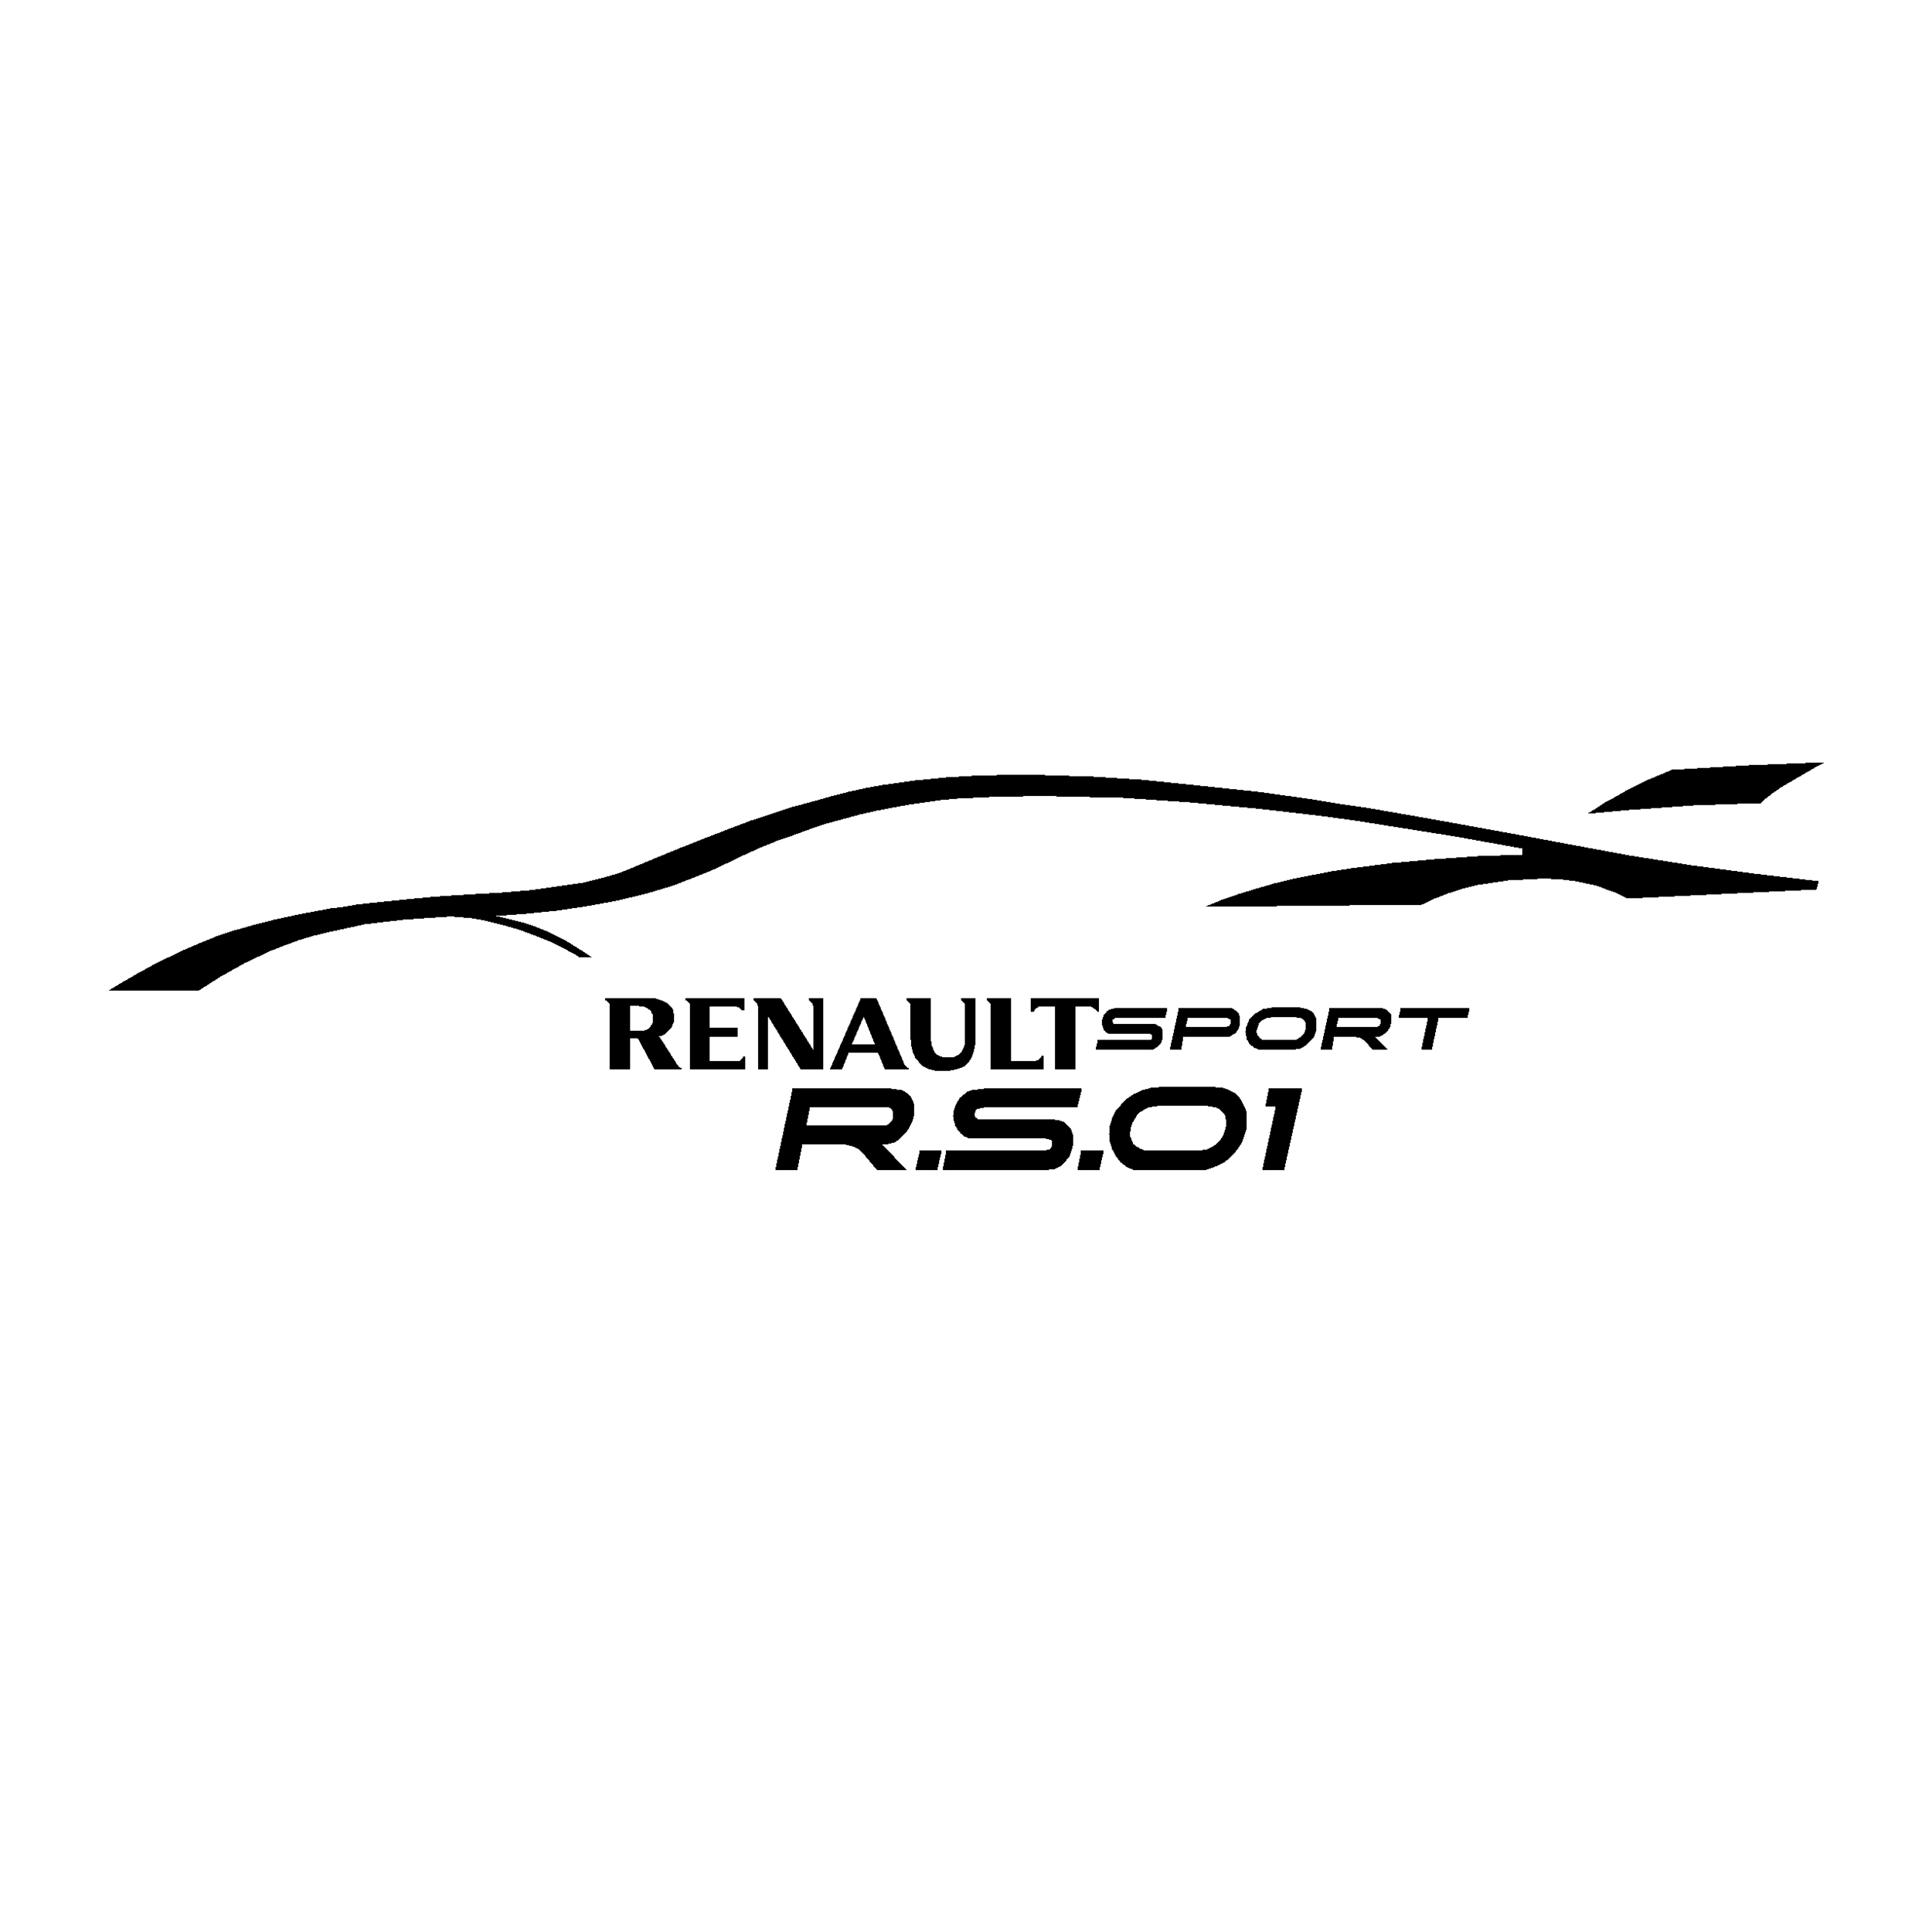 Stickers RENAULT sport ref 134a - VOITURE/RENAULT - automotostick